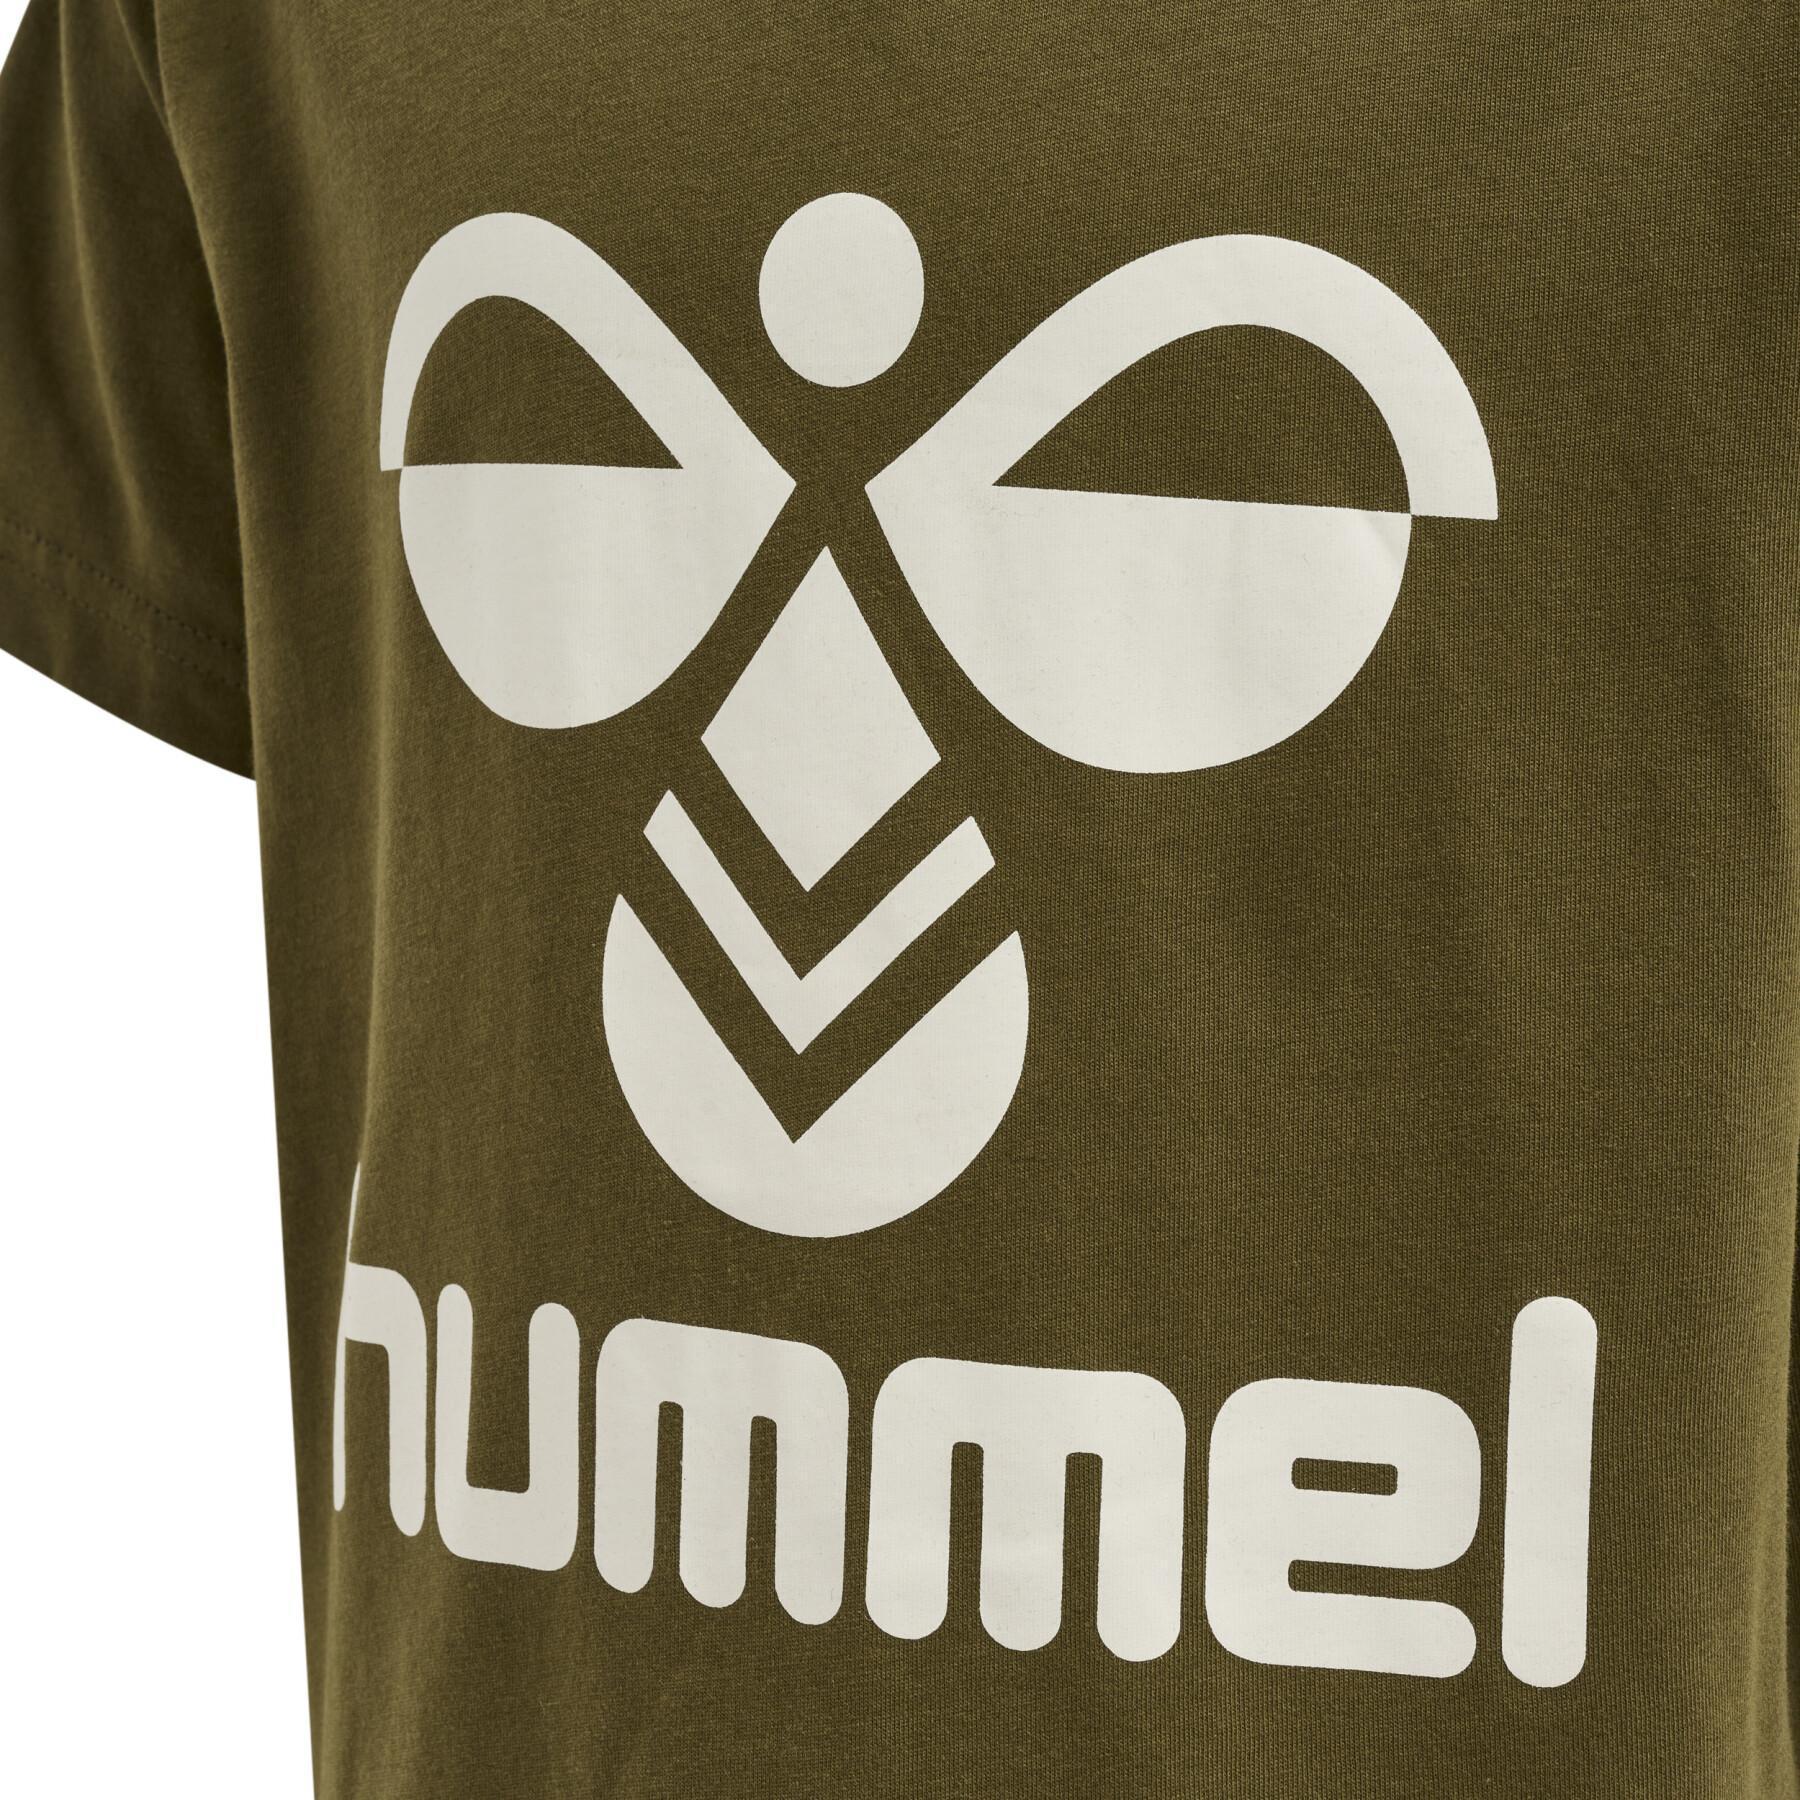 Maglietta per bambini Hummel Tres